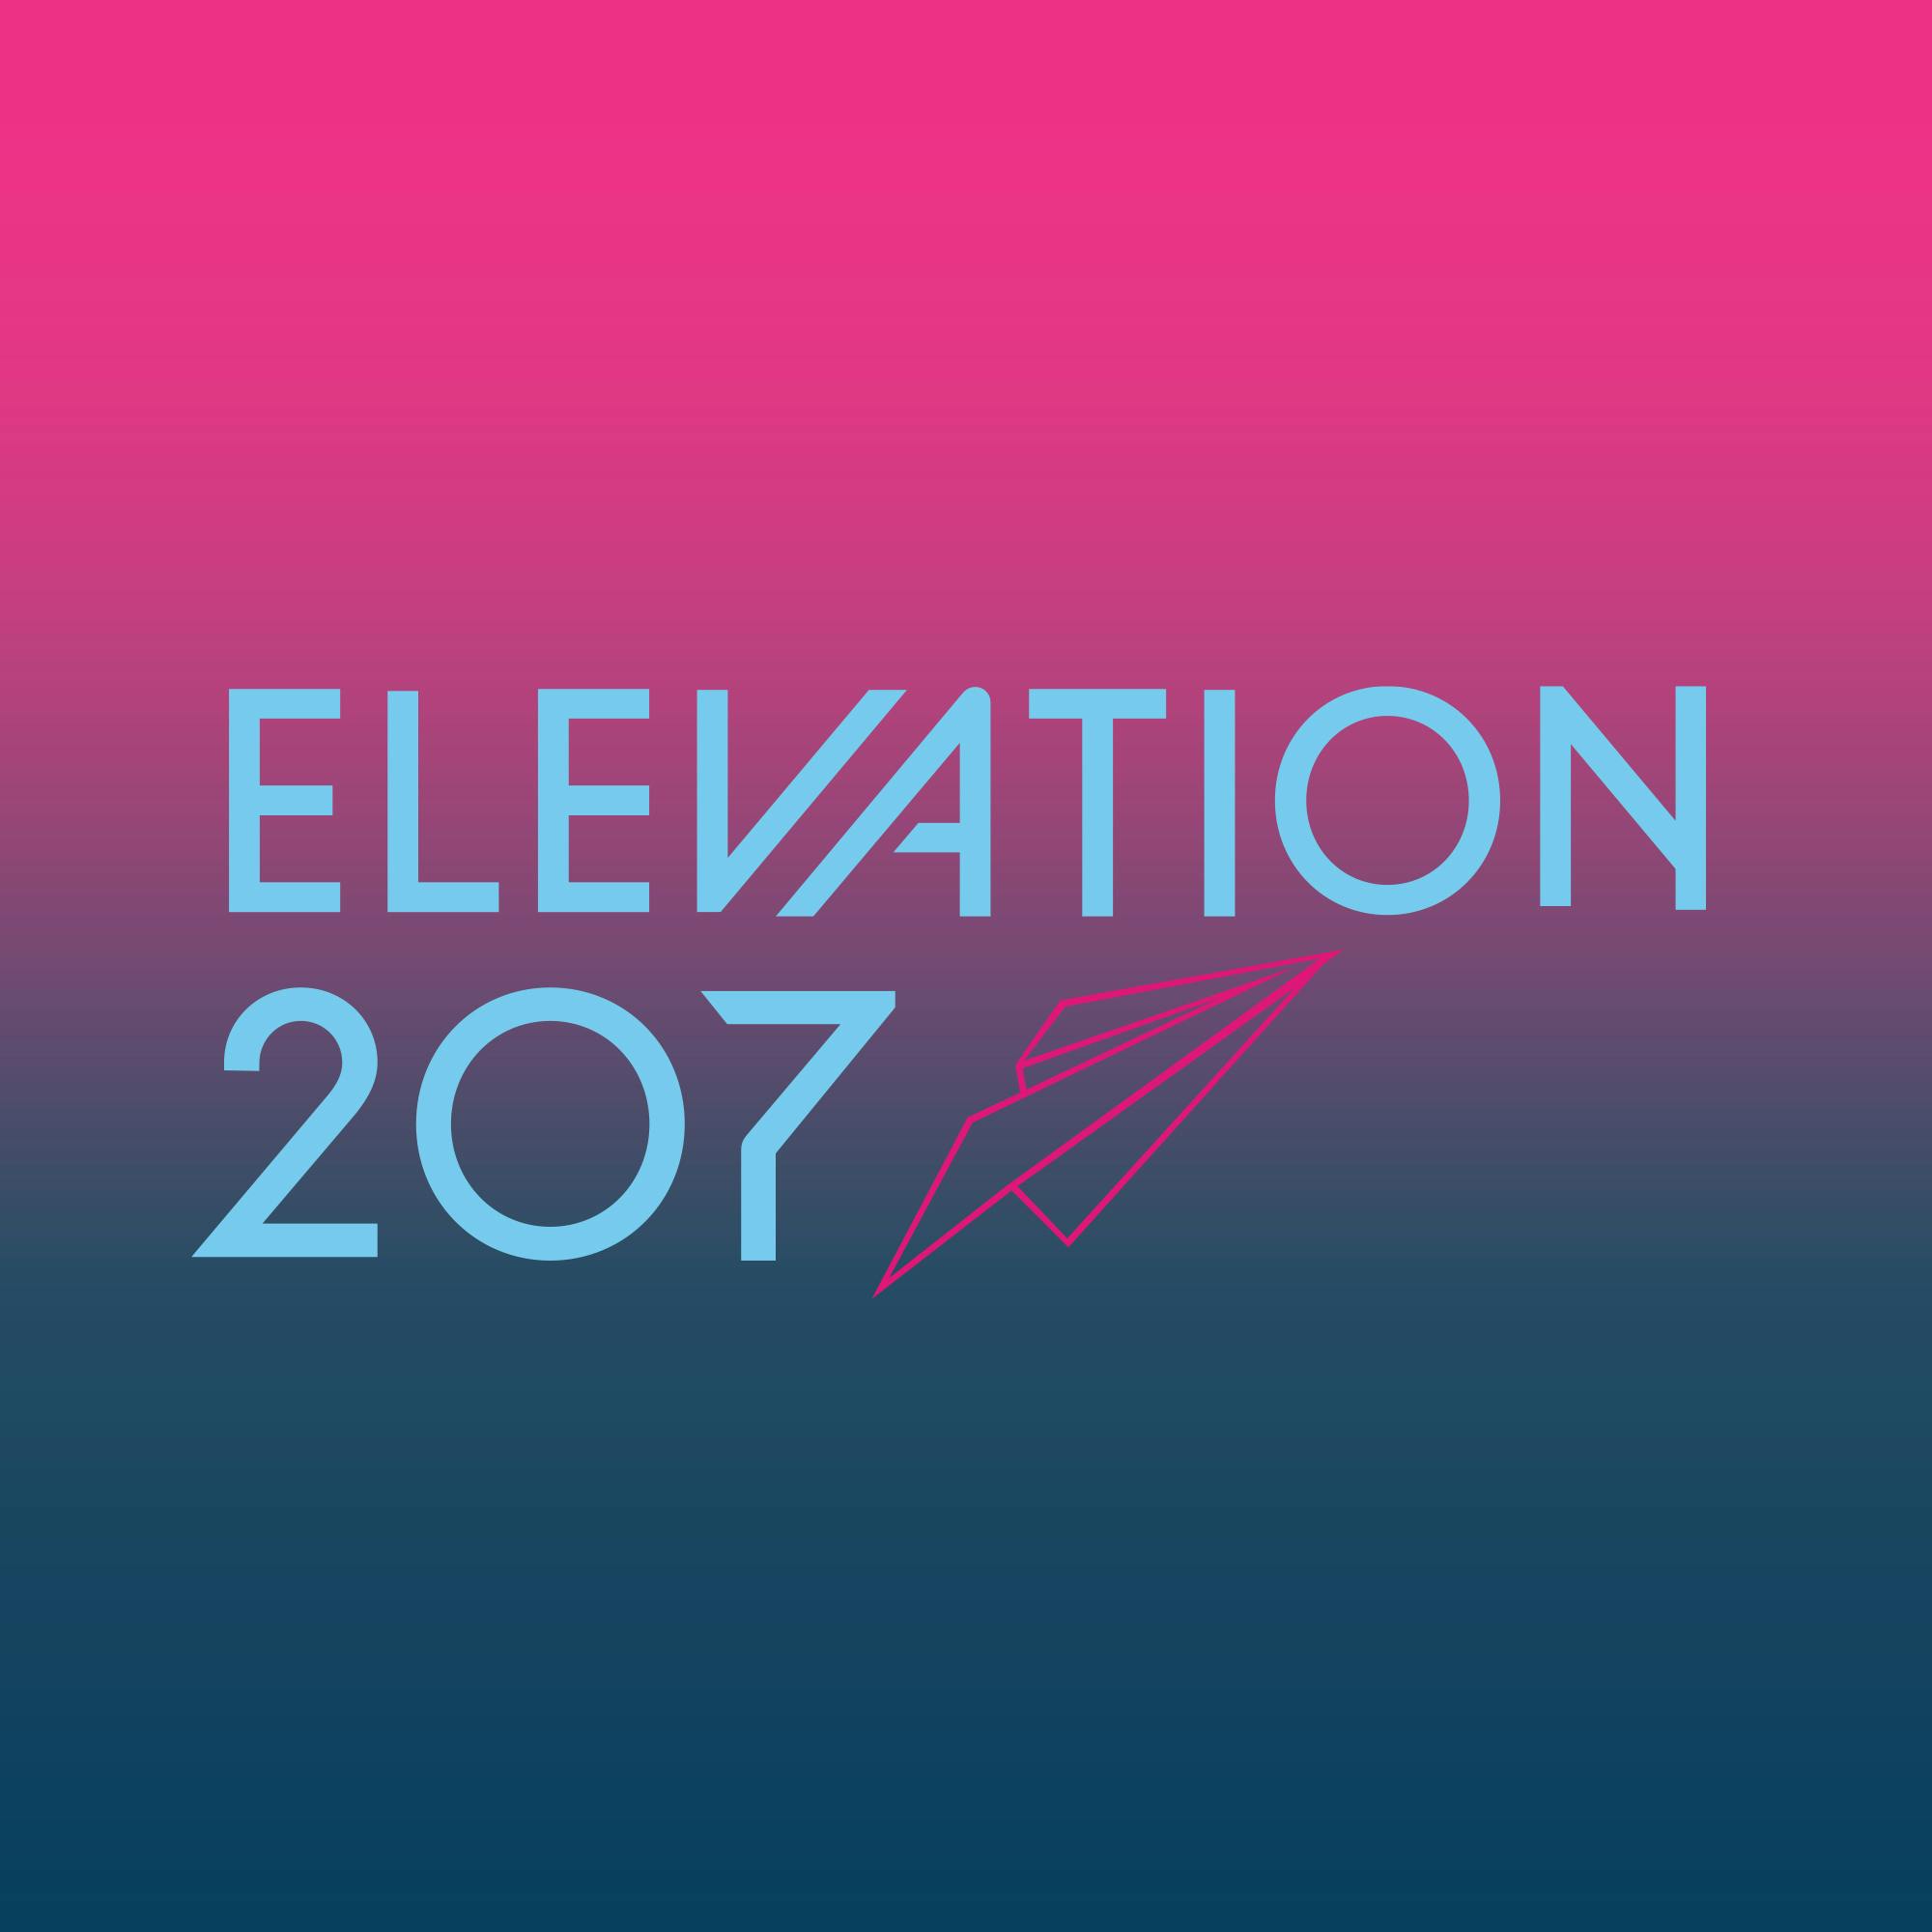 Elevation 207